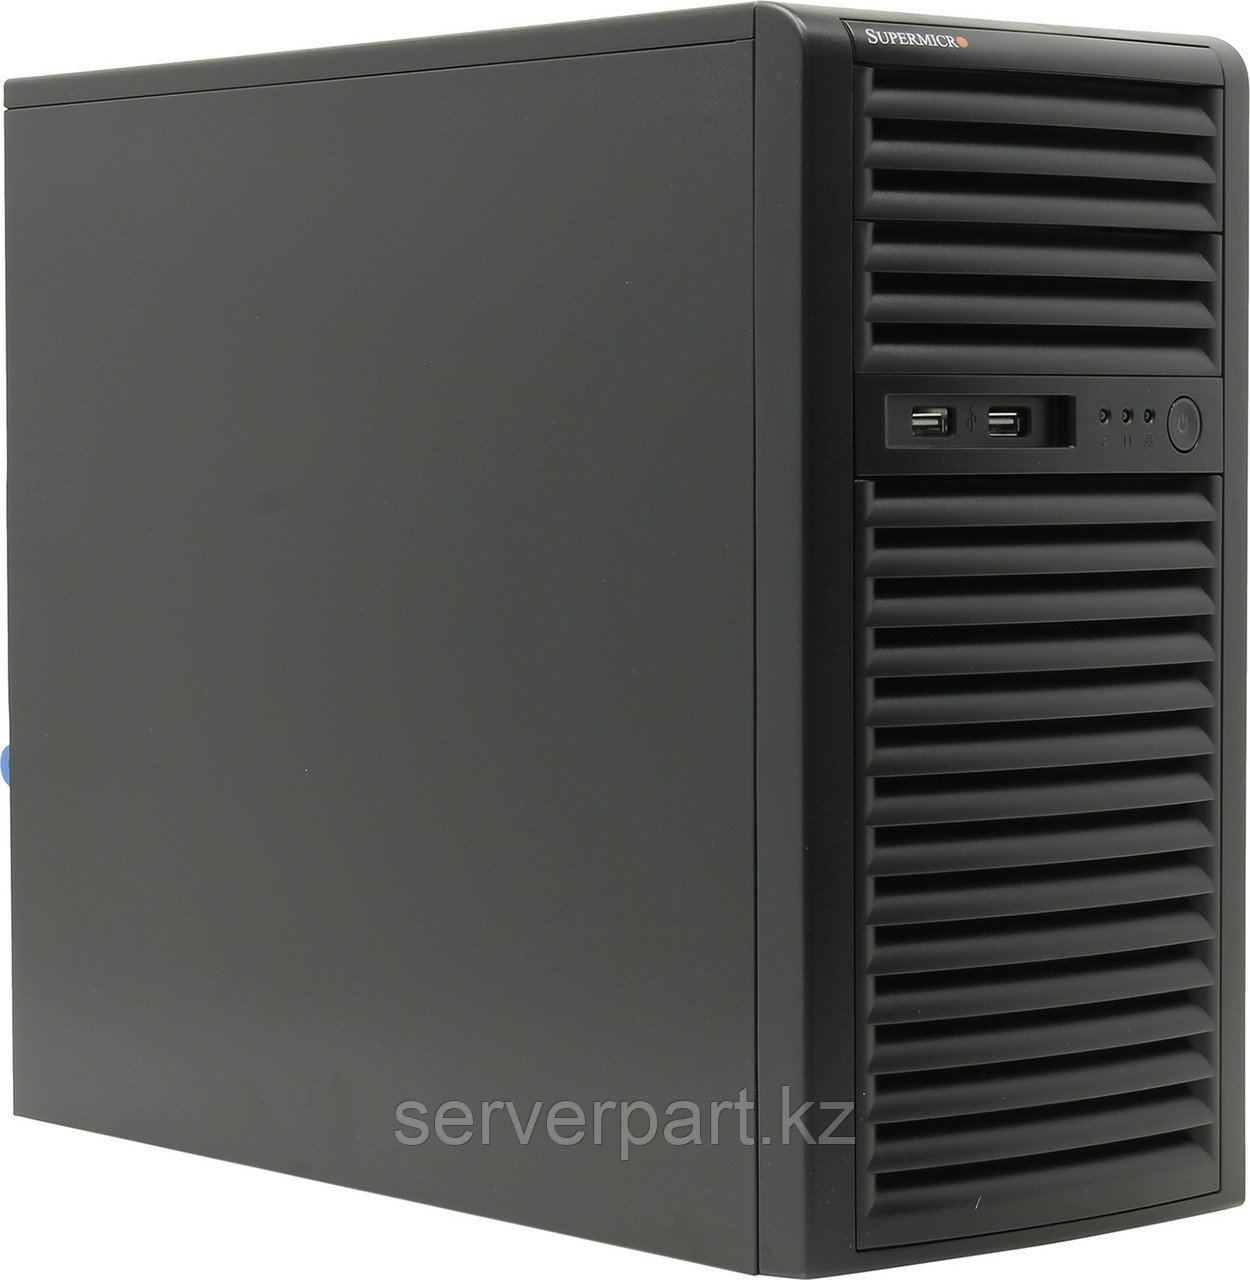 Сервер Supermicro SYS-5039D Tower/4-core intel xeon E3-1220v6 3GHz/64GB UDIMM nECC/1x240GB SSD MU Hyb